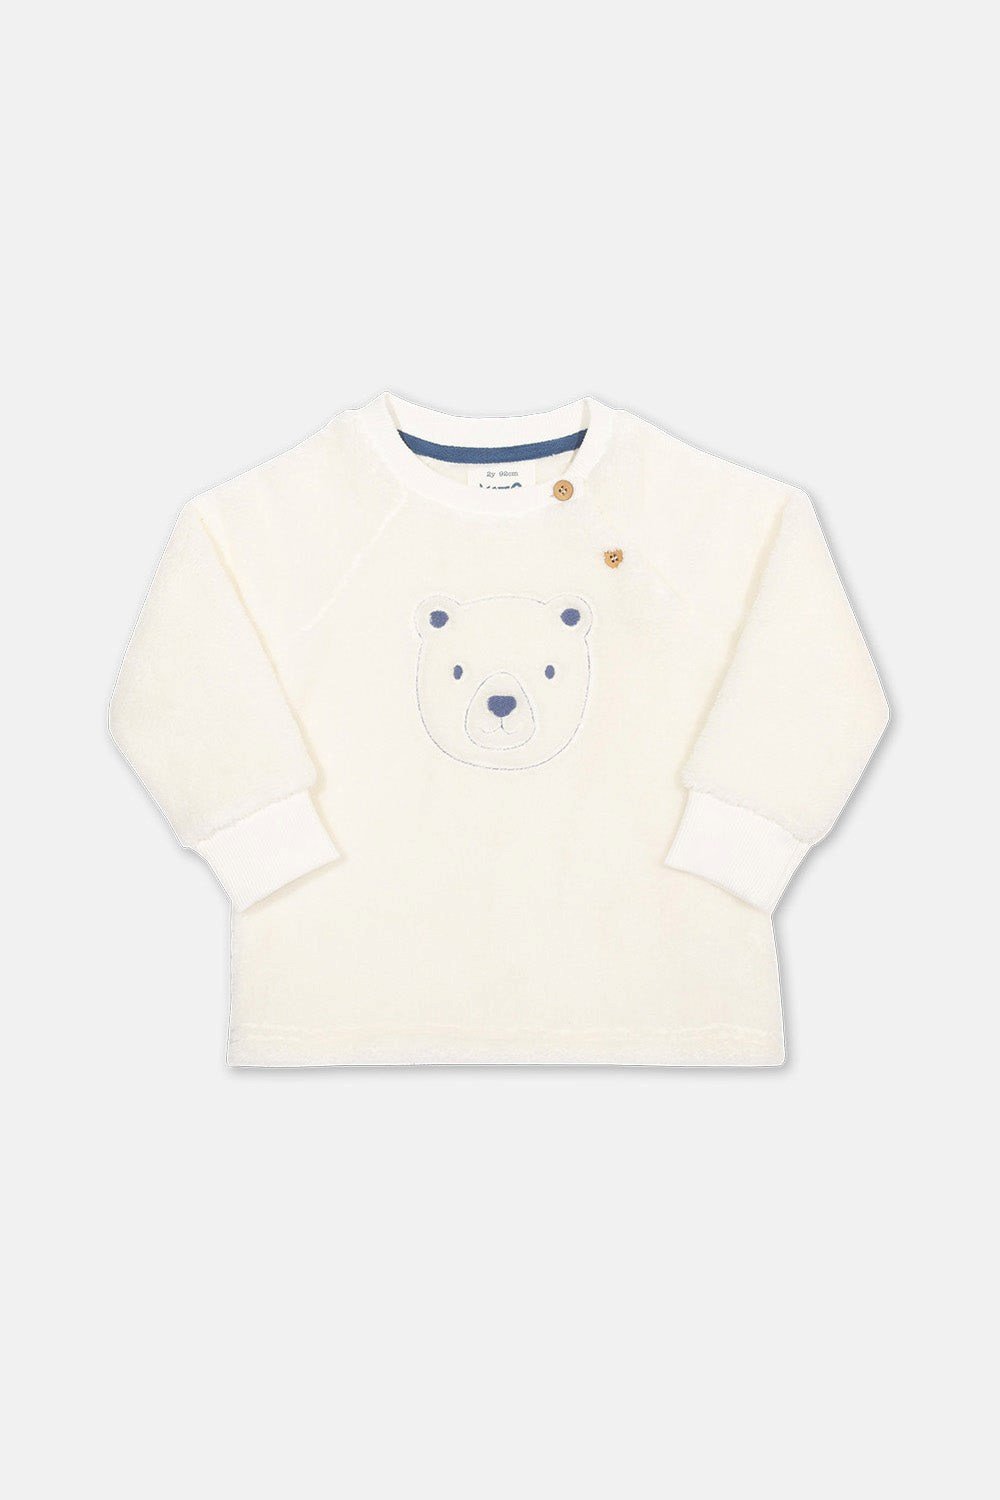 Mr Bear Baby/Kids Fleece -